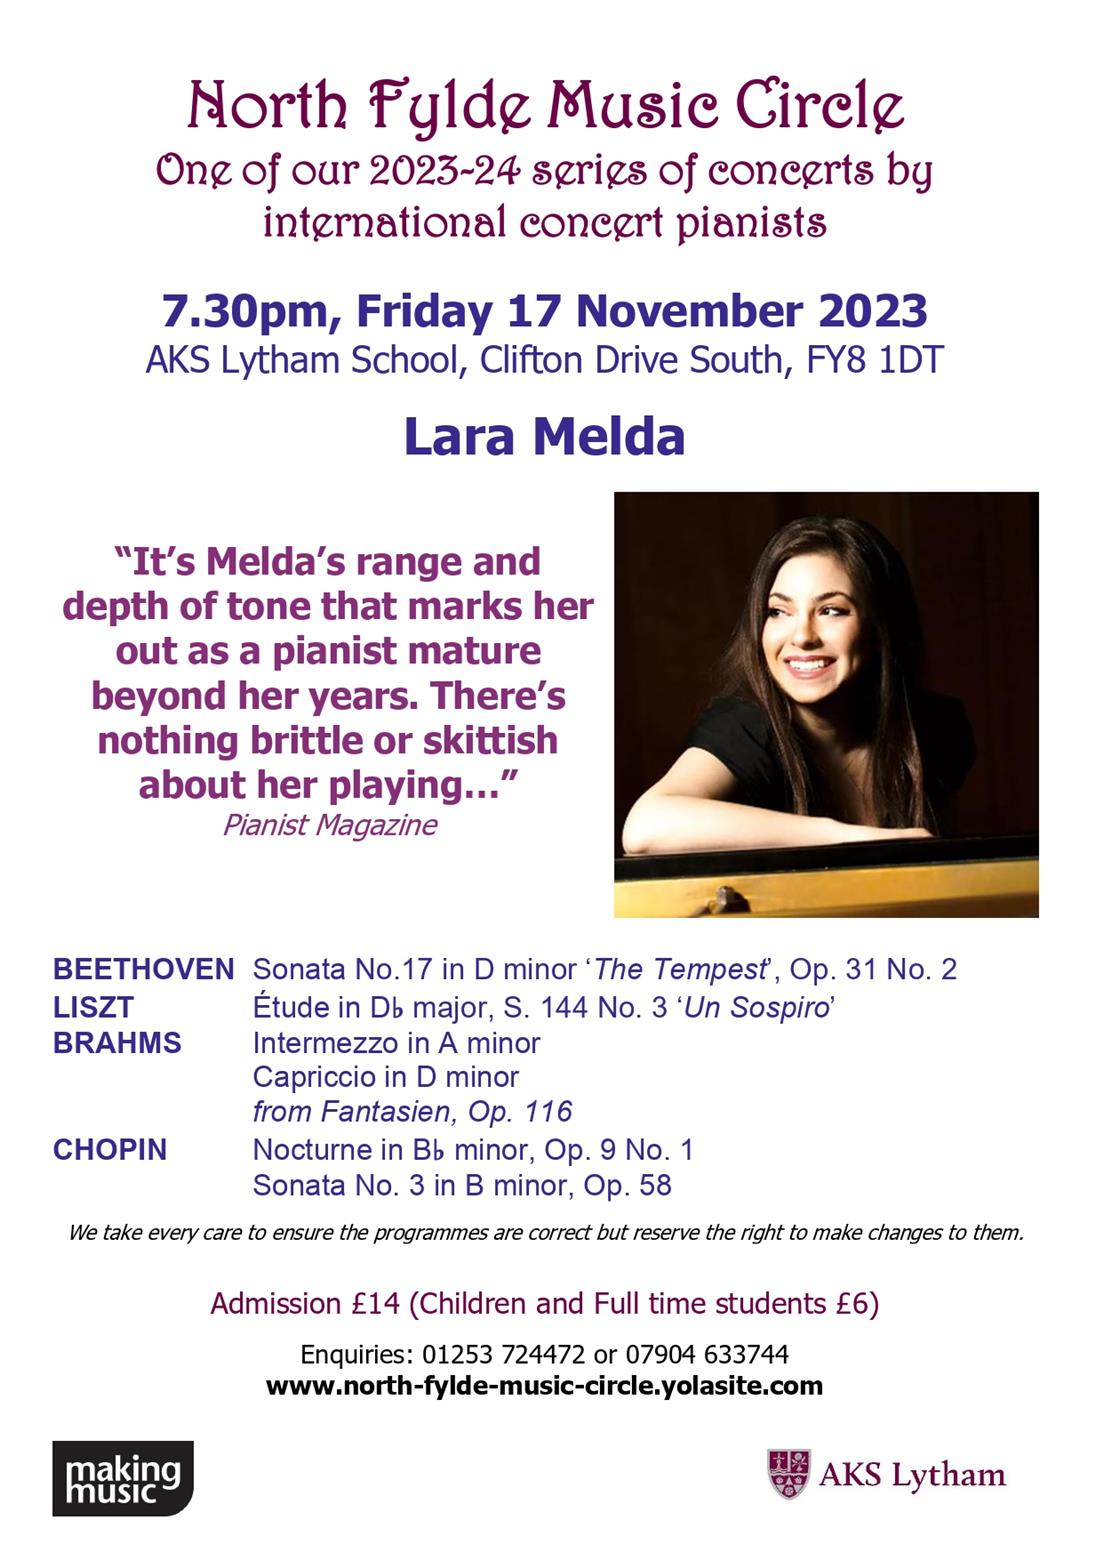 NFMC present pianist, Lara Melda